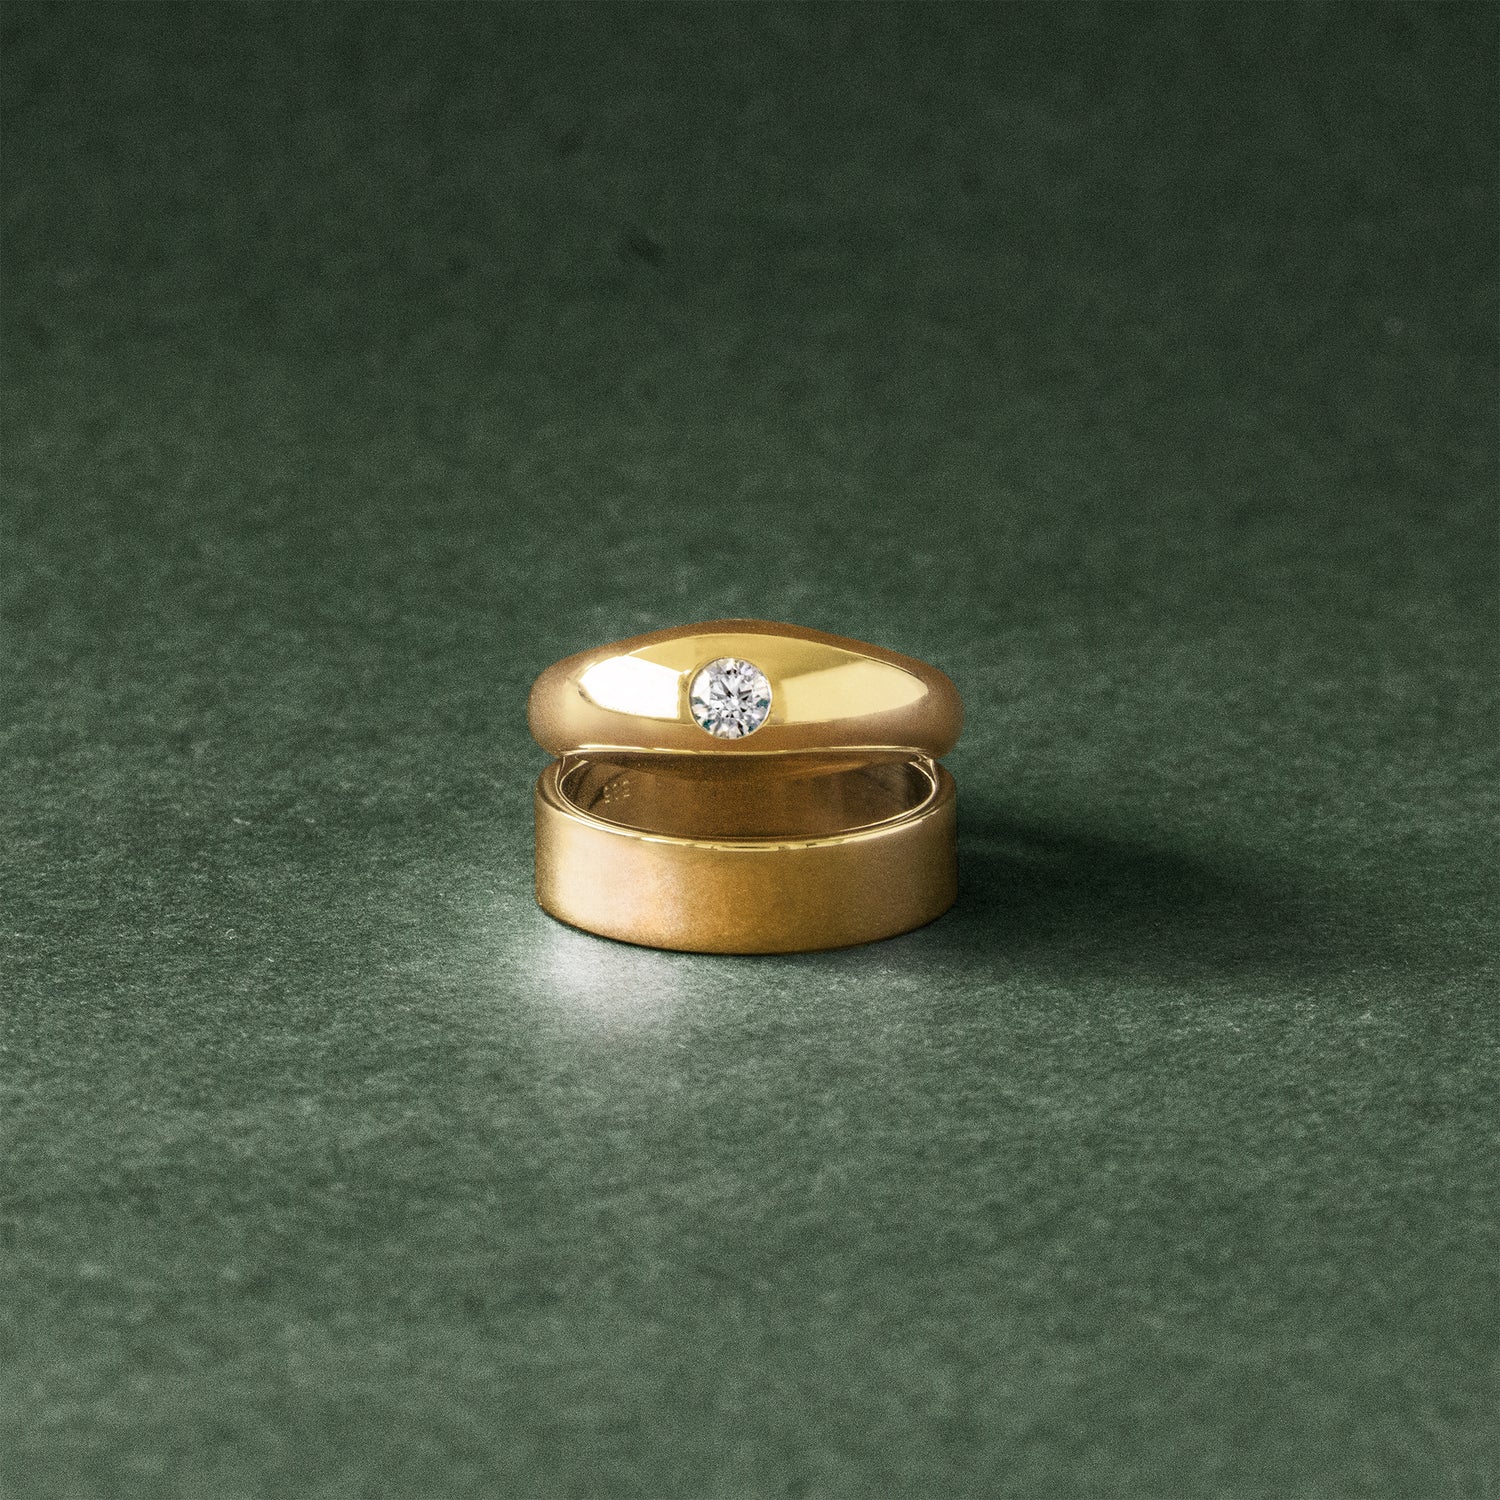 Gold lab diamond statement rings stack - AïANA